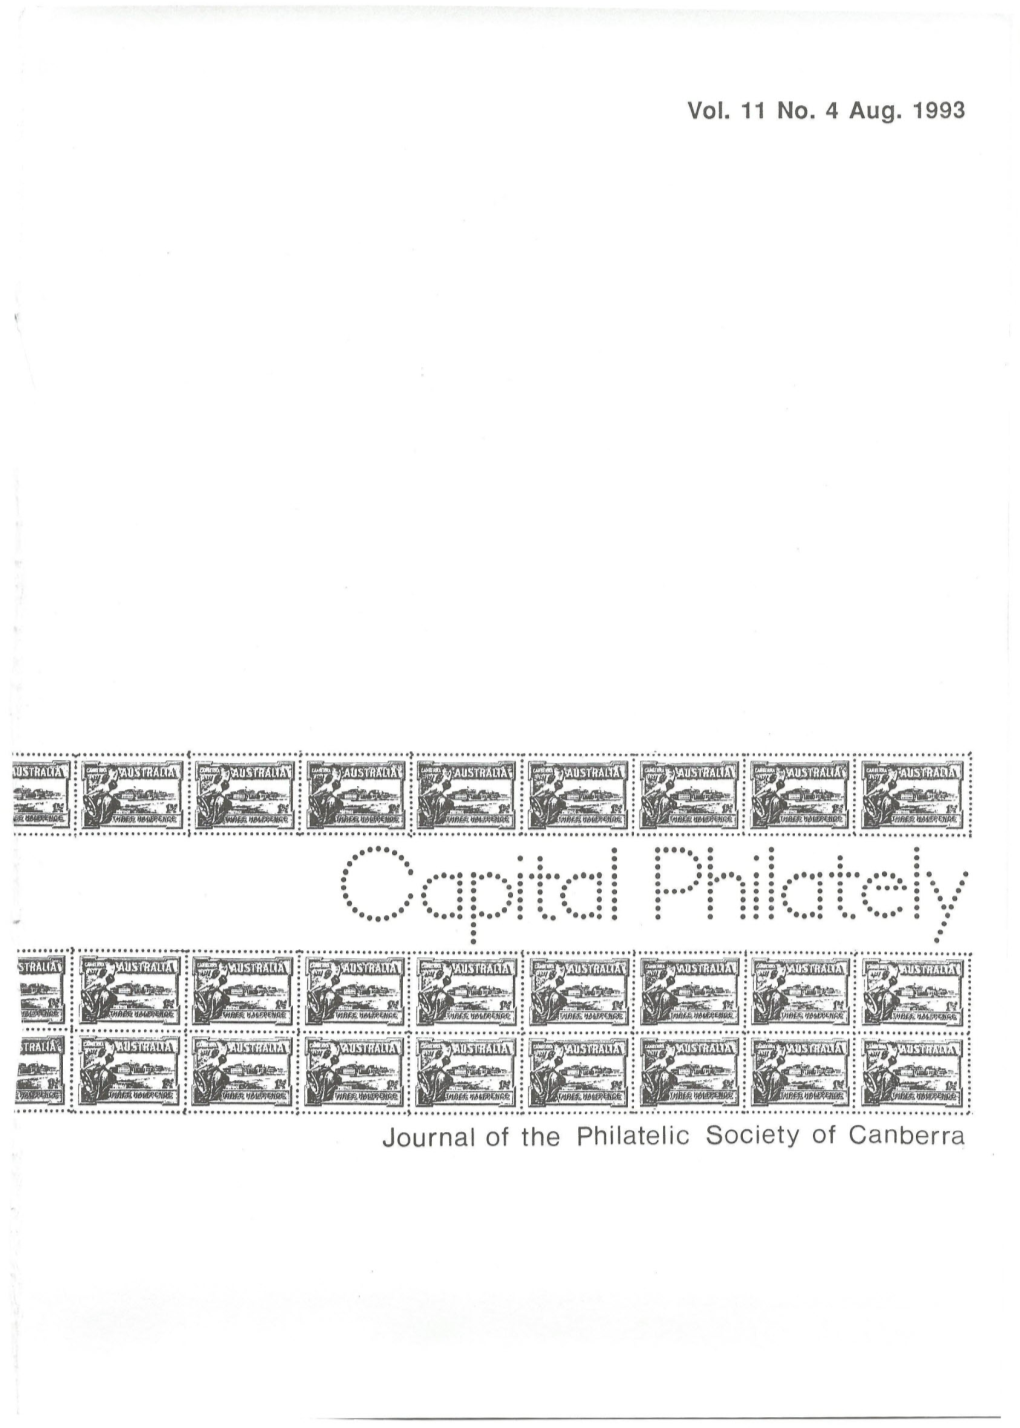 Capital-Philately-Vol-11-No-4.Pdf